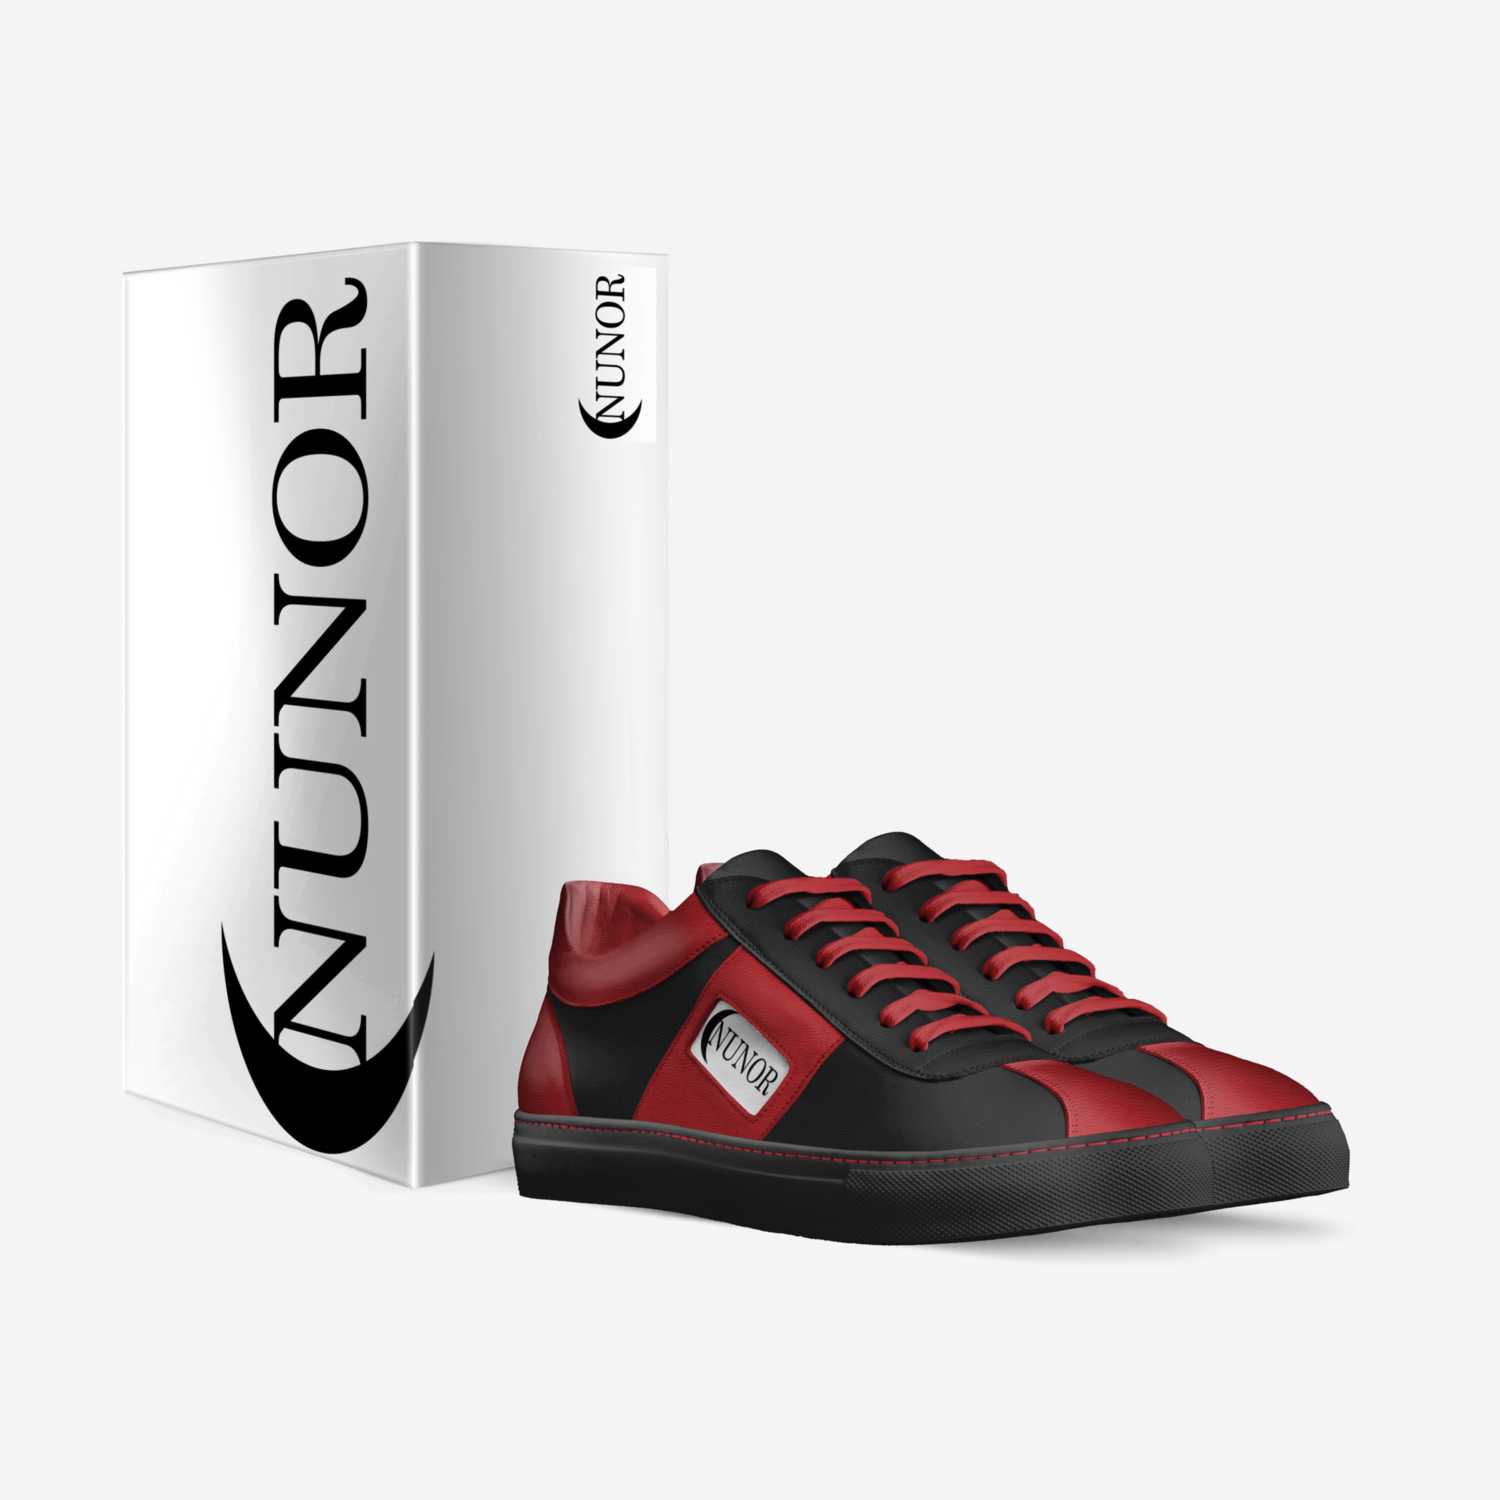 Nunor custom made in Italy shoes by Alfuquan Daniels | Box view